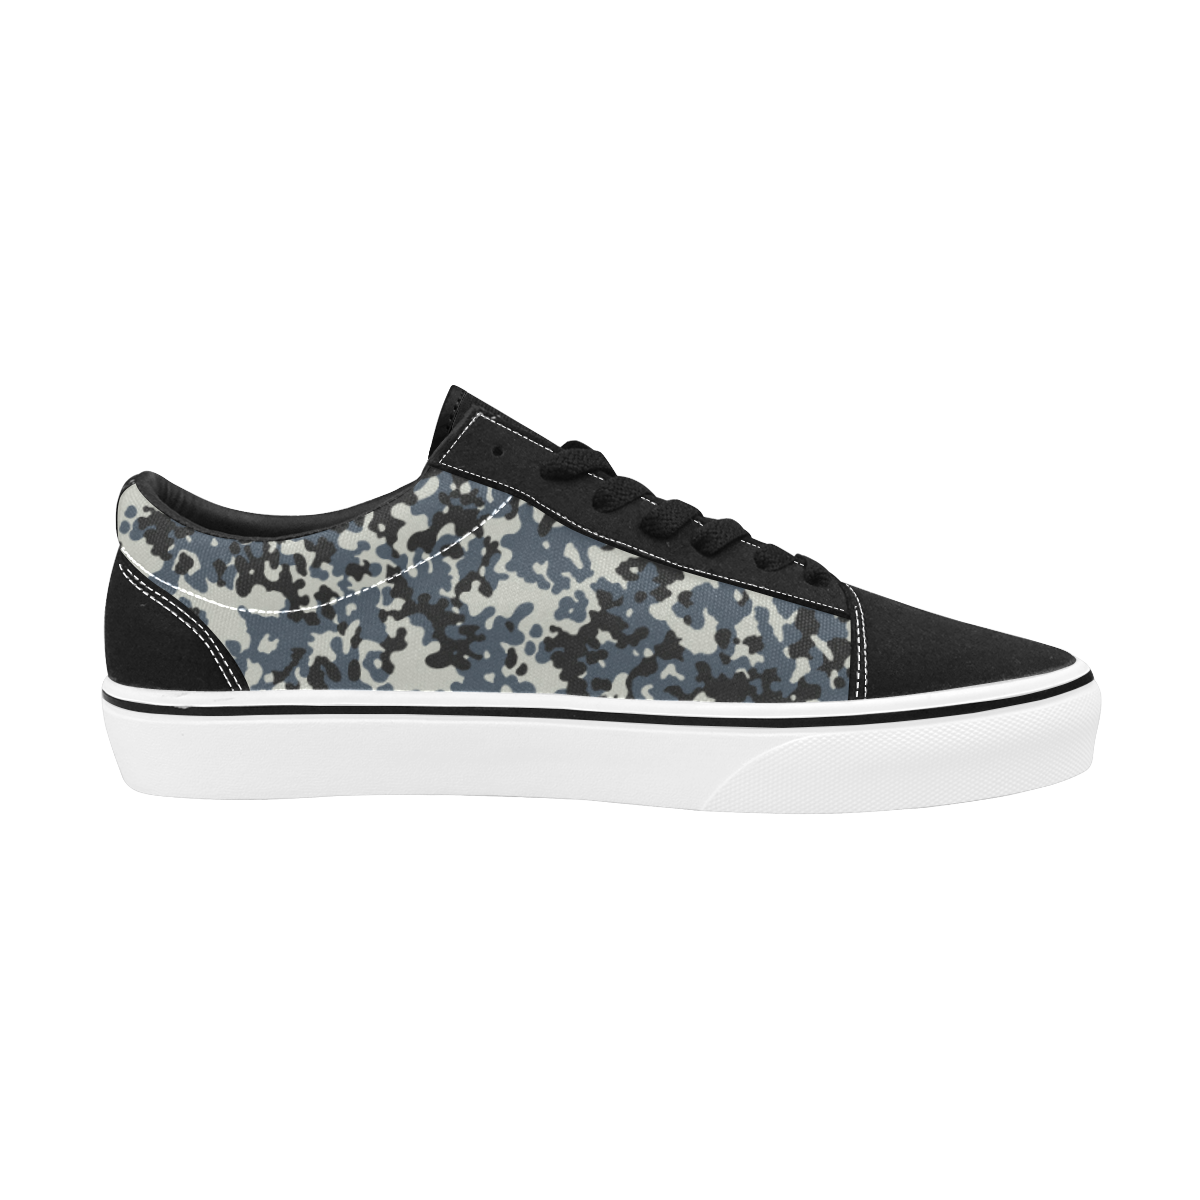 Urban City Black/Gray Digital Camouflage Women's Low Top Skateboarding Shoes (Model E001-2)